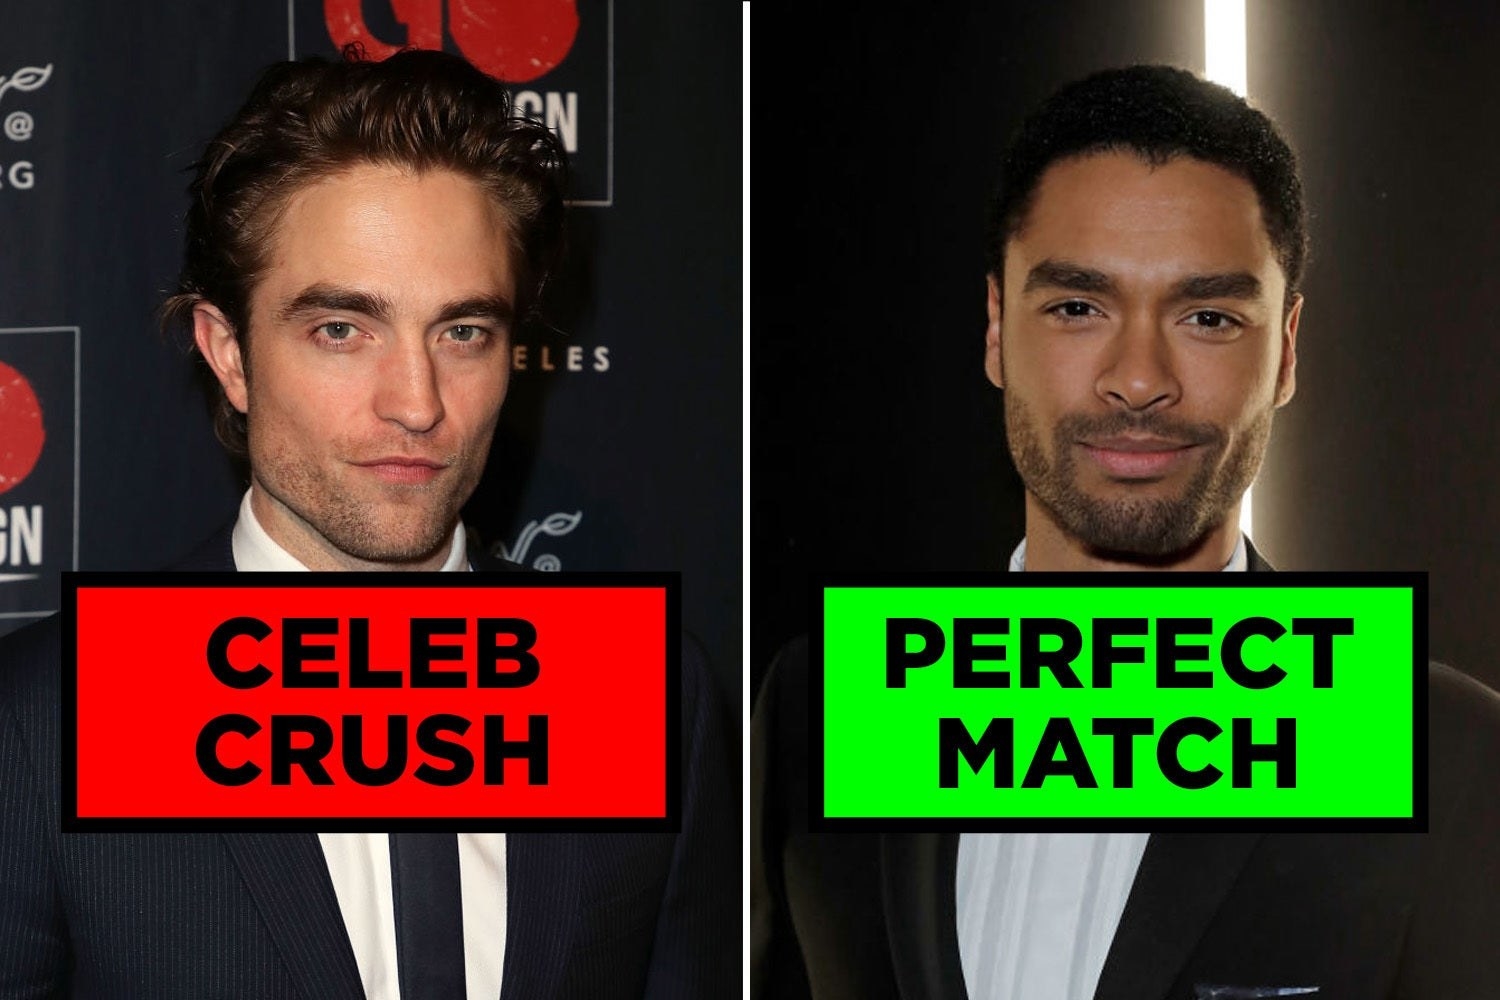 Robert Pattinson labeled &quot;CELEB CRUSH&quot;, and Regé-Jean Page labeled &quot;PERFECT MATCH&quot; 